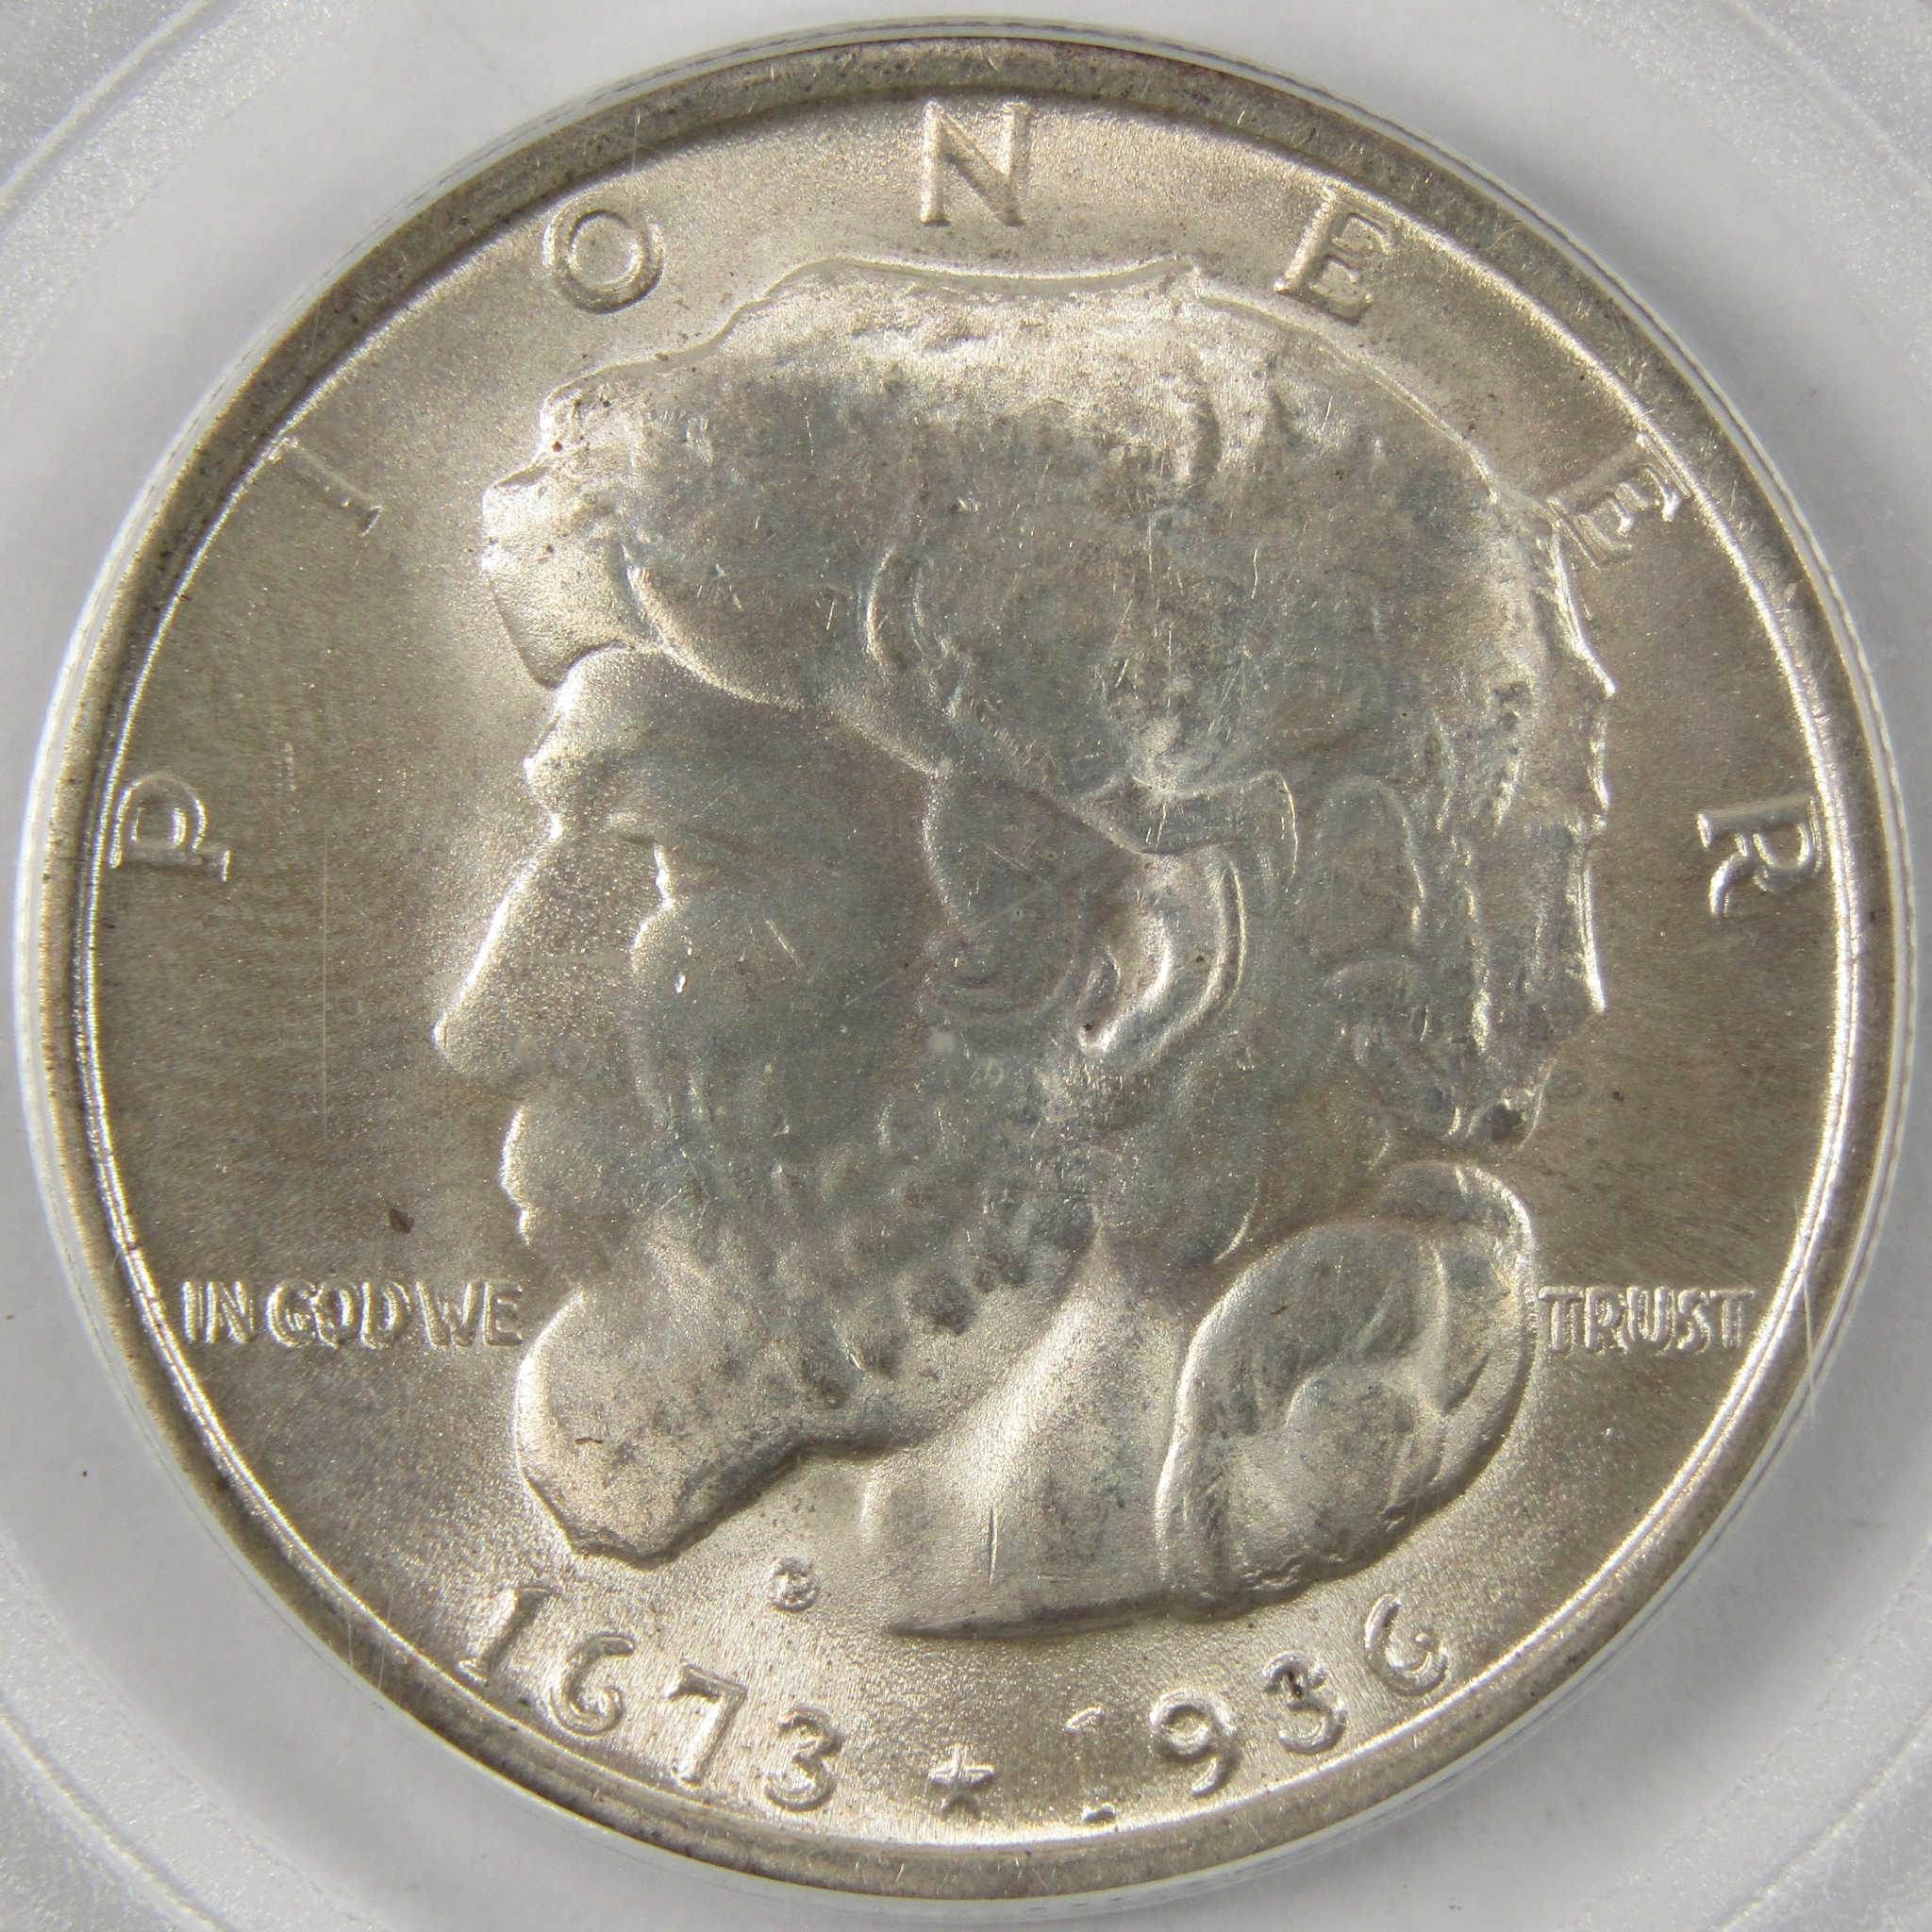 Elgin Illinois Commemorative Half Dollar 1936 MS 65 PCGS CAC SKU:I9445